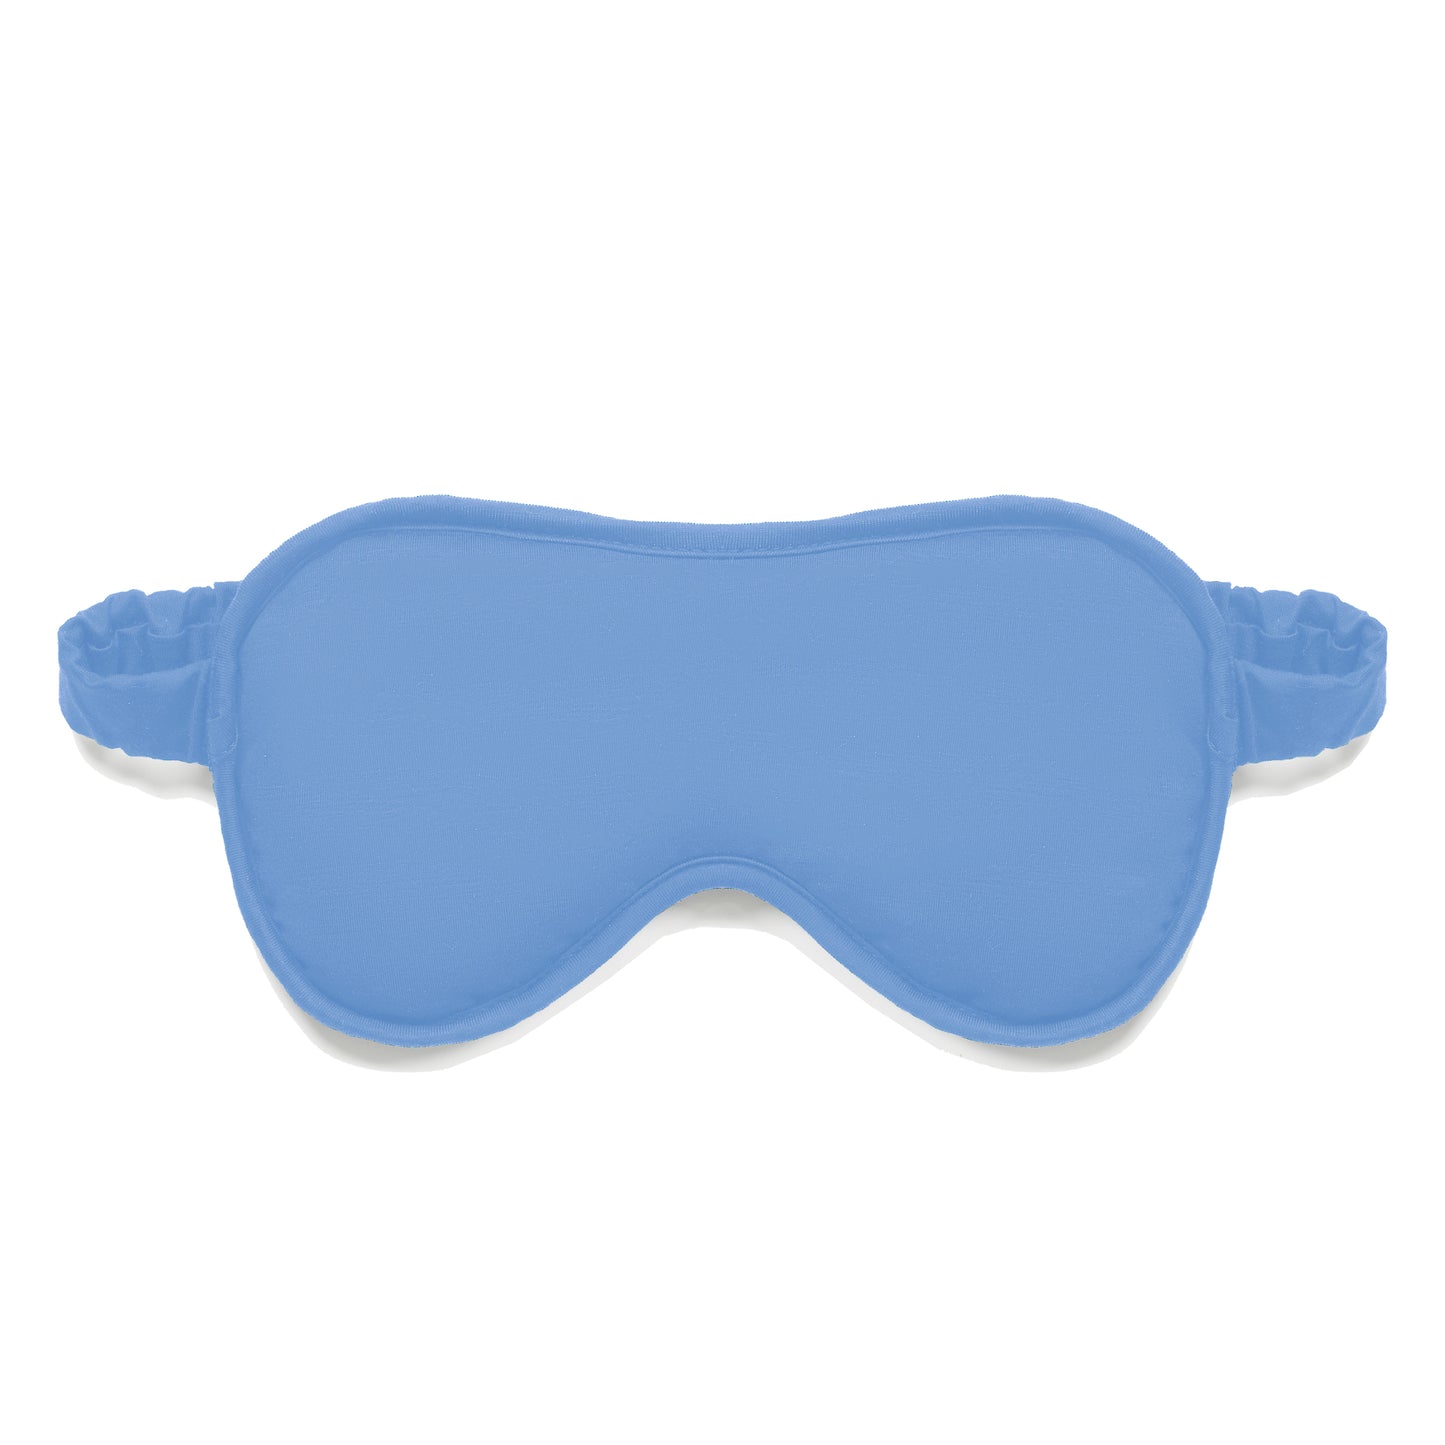 Balance sleep mask || Serene blue